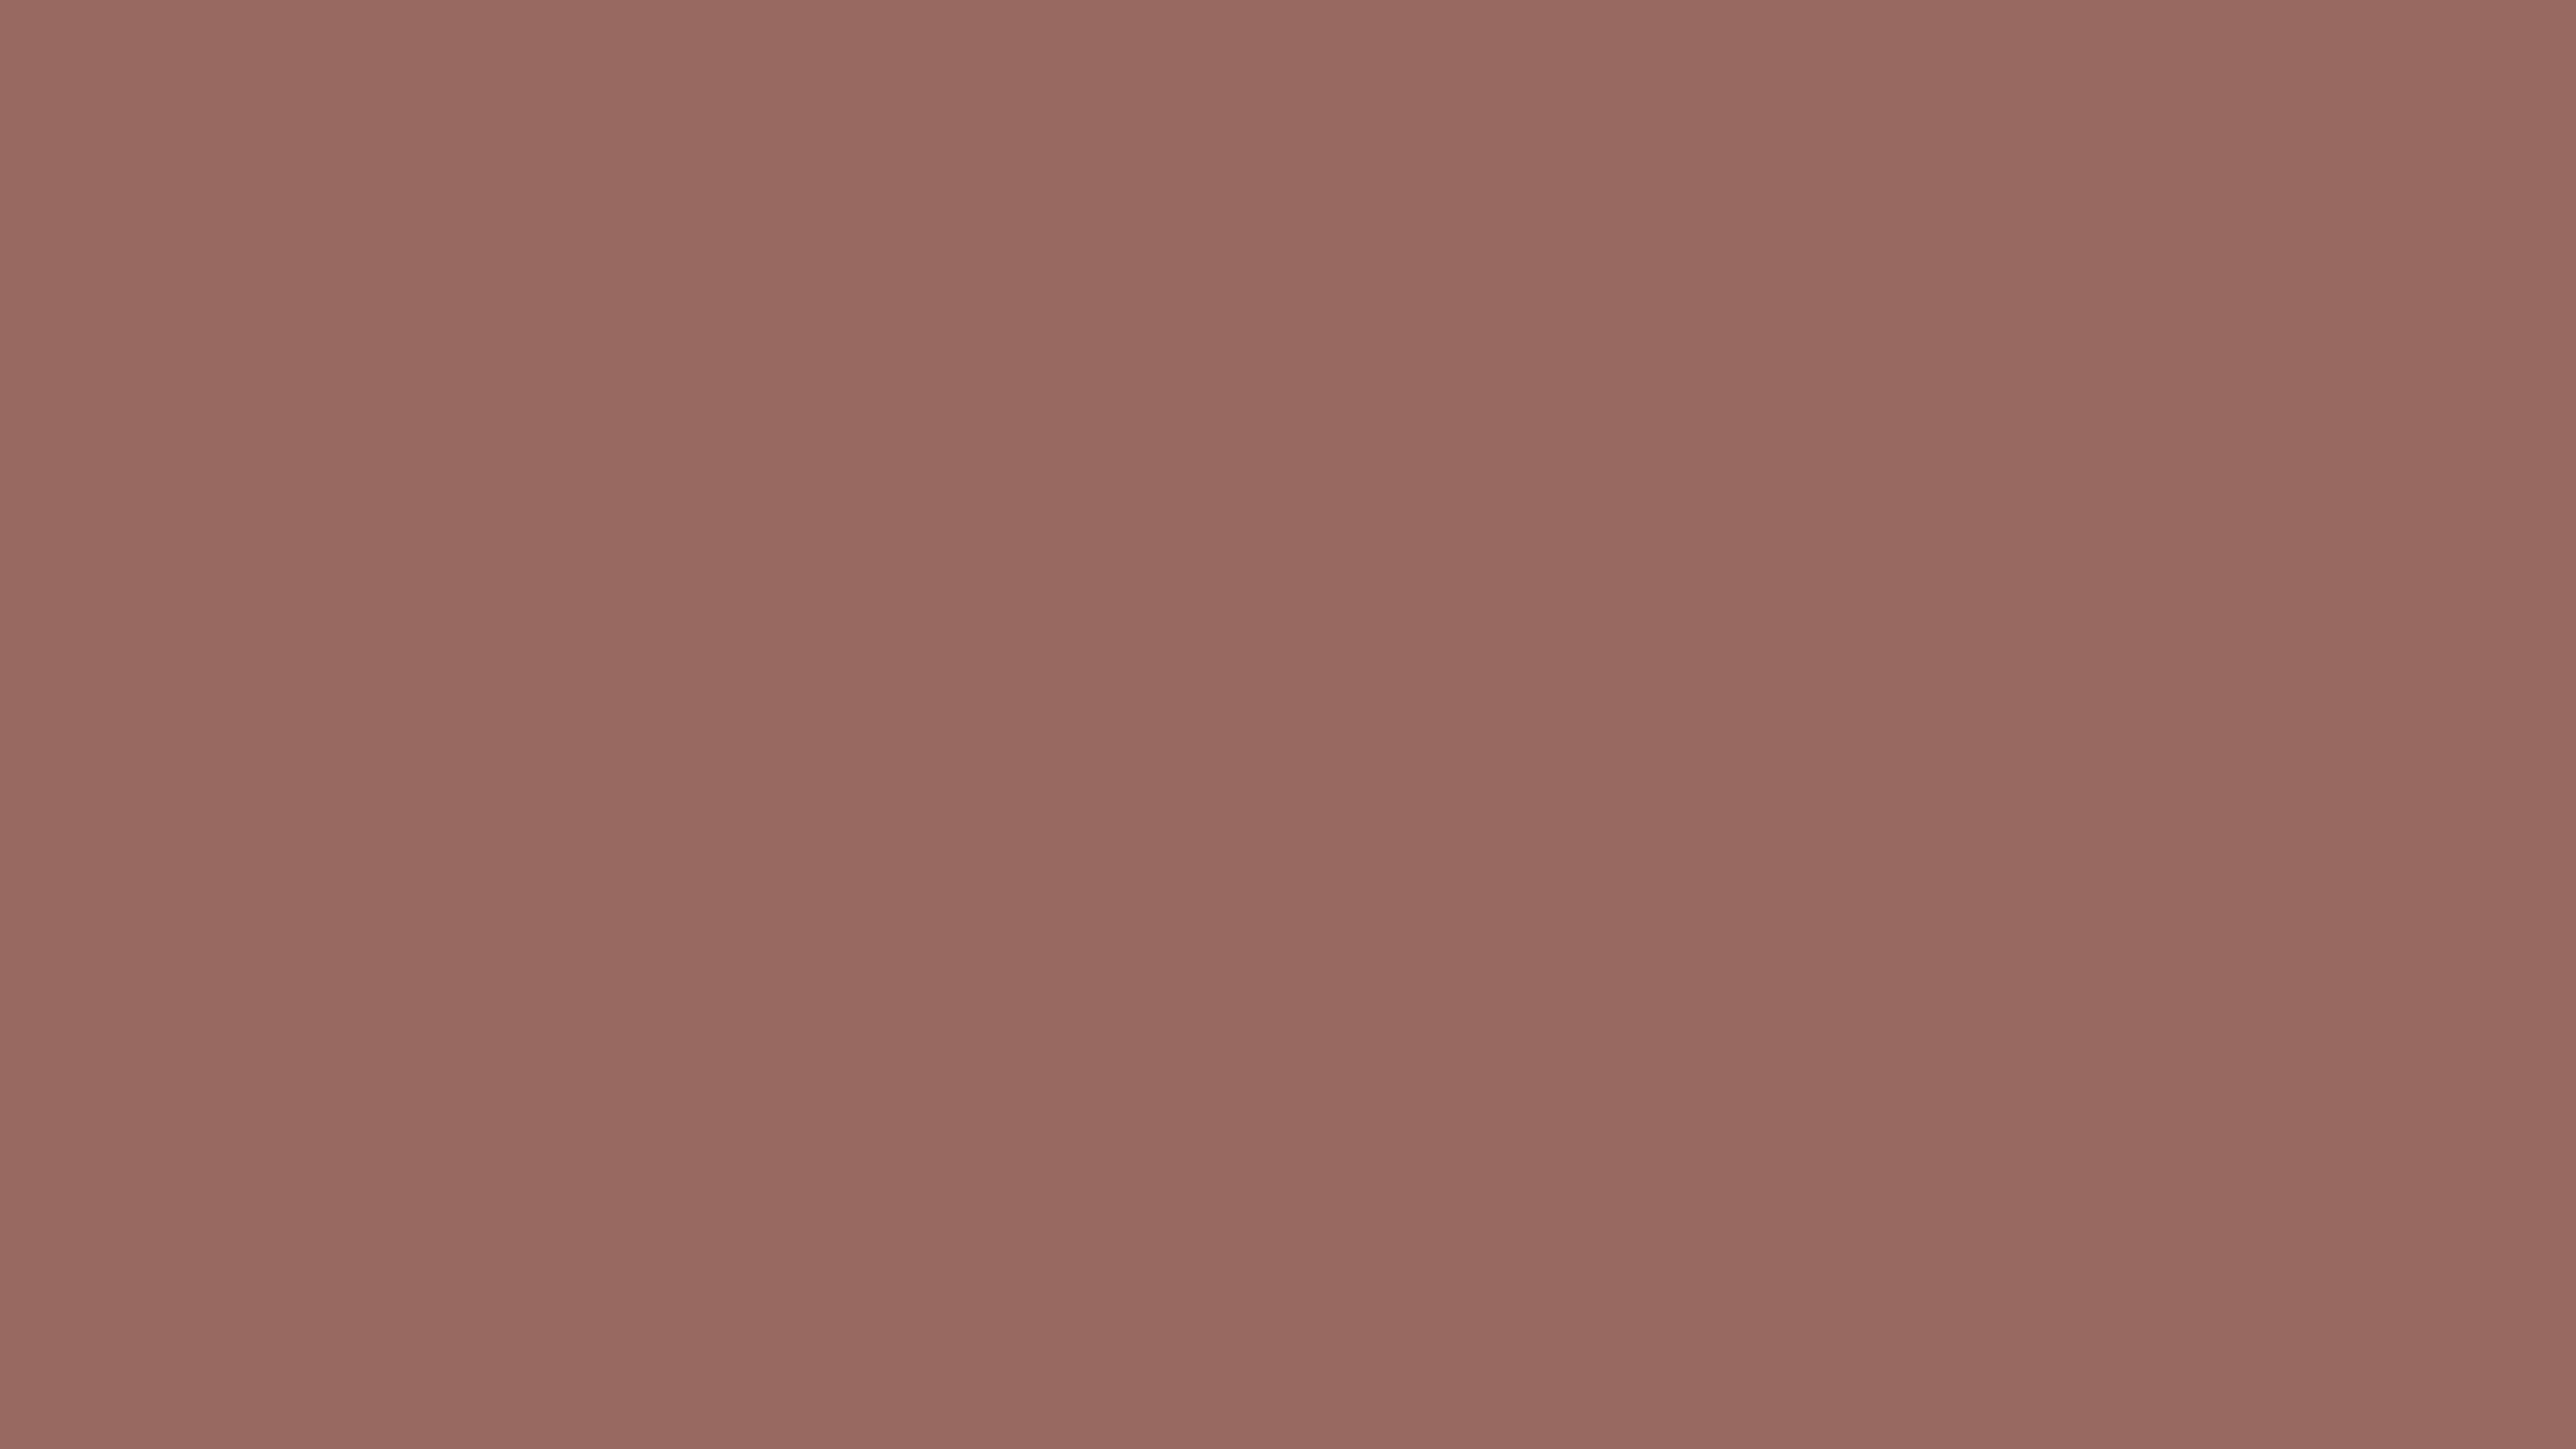 7680x4320 Dark Chestnut Solid Color Background